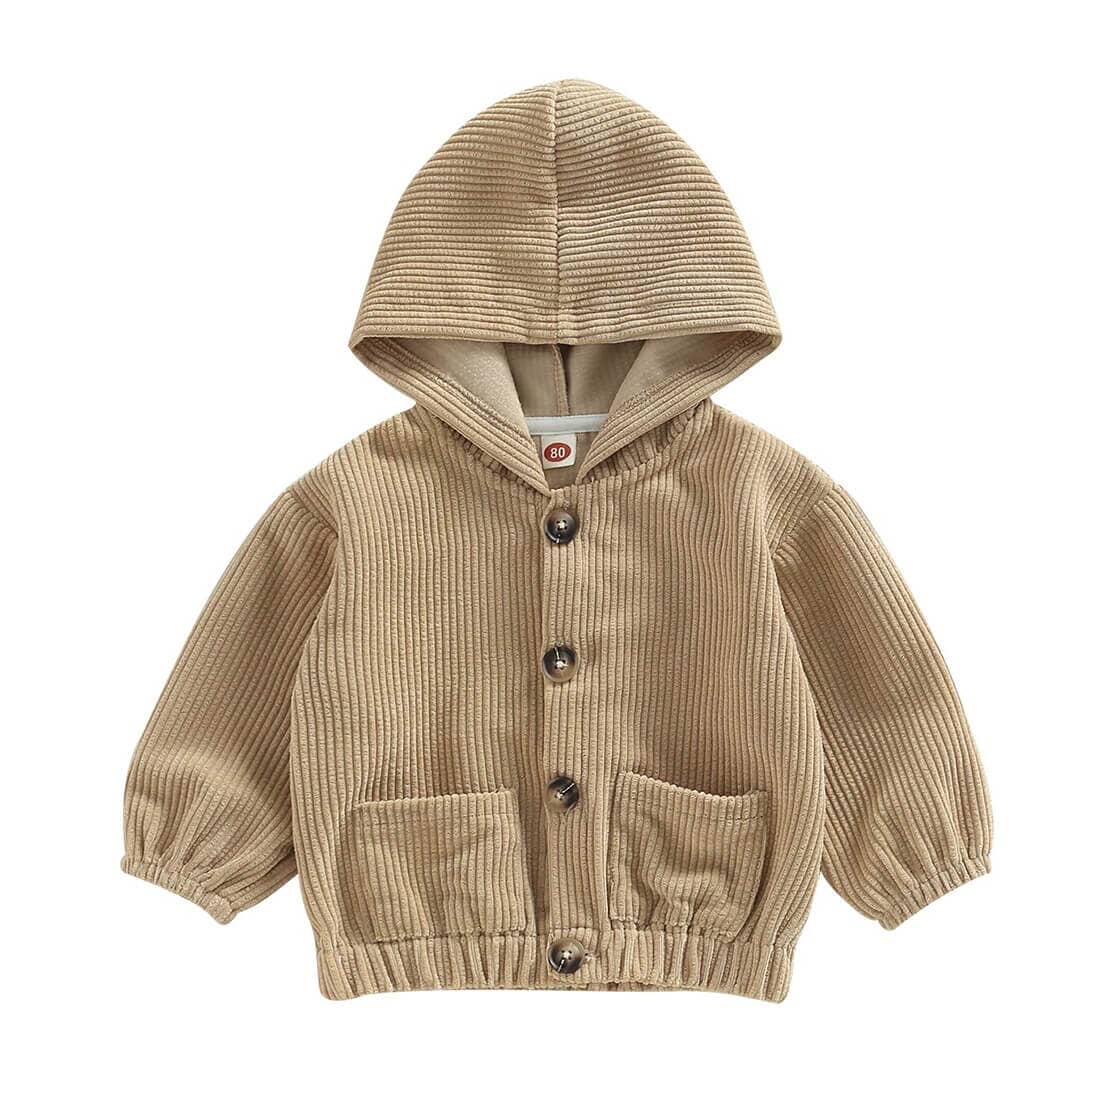 Solid Corduroy Hooded Toddler Jacket Jacket The Trendy Toddlers Khaki 9-12 M 